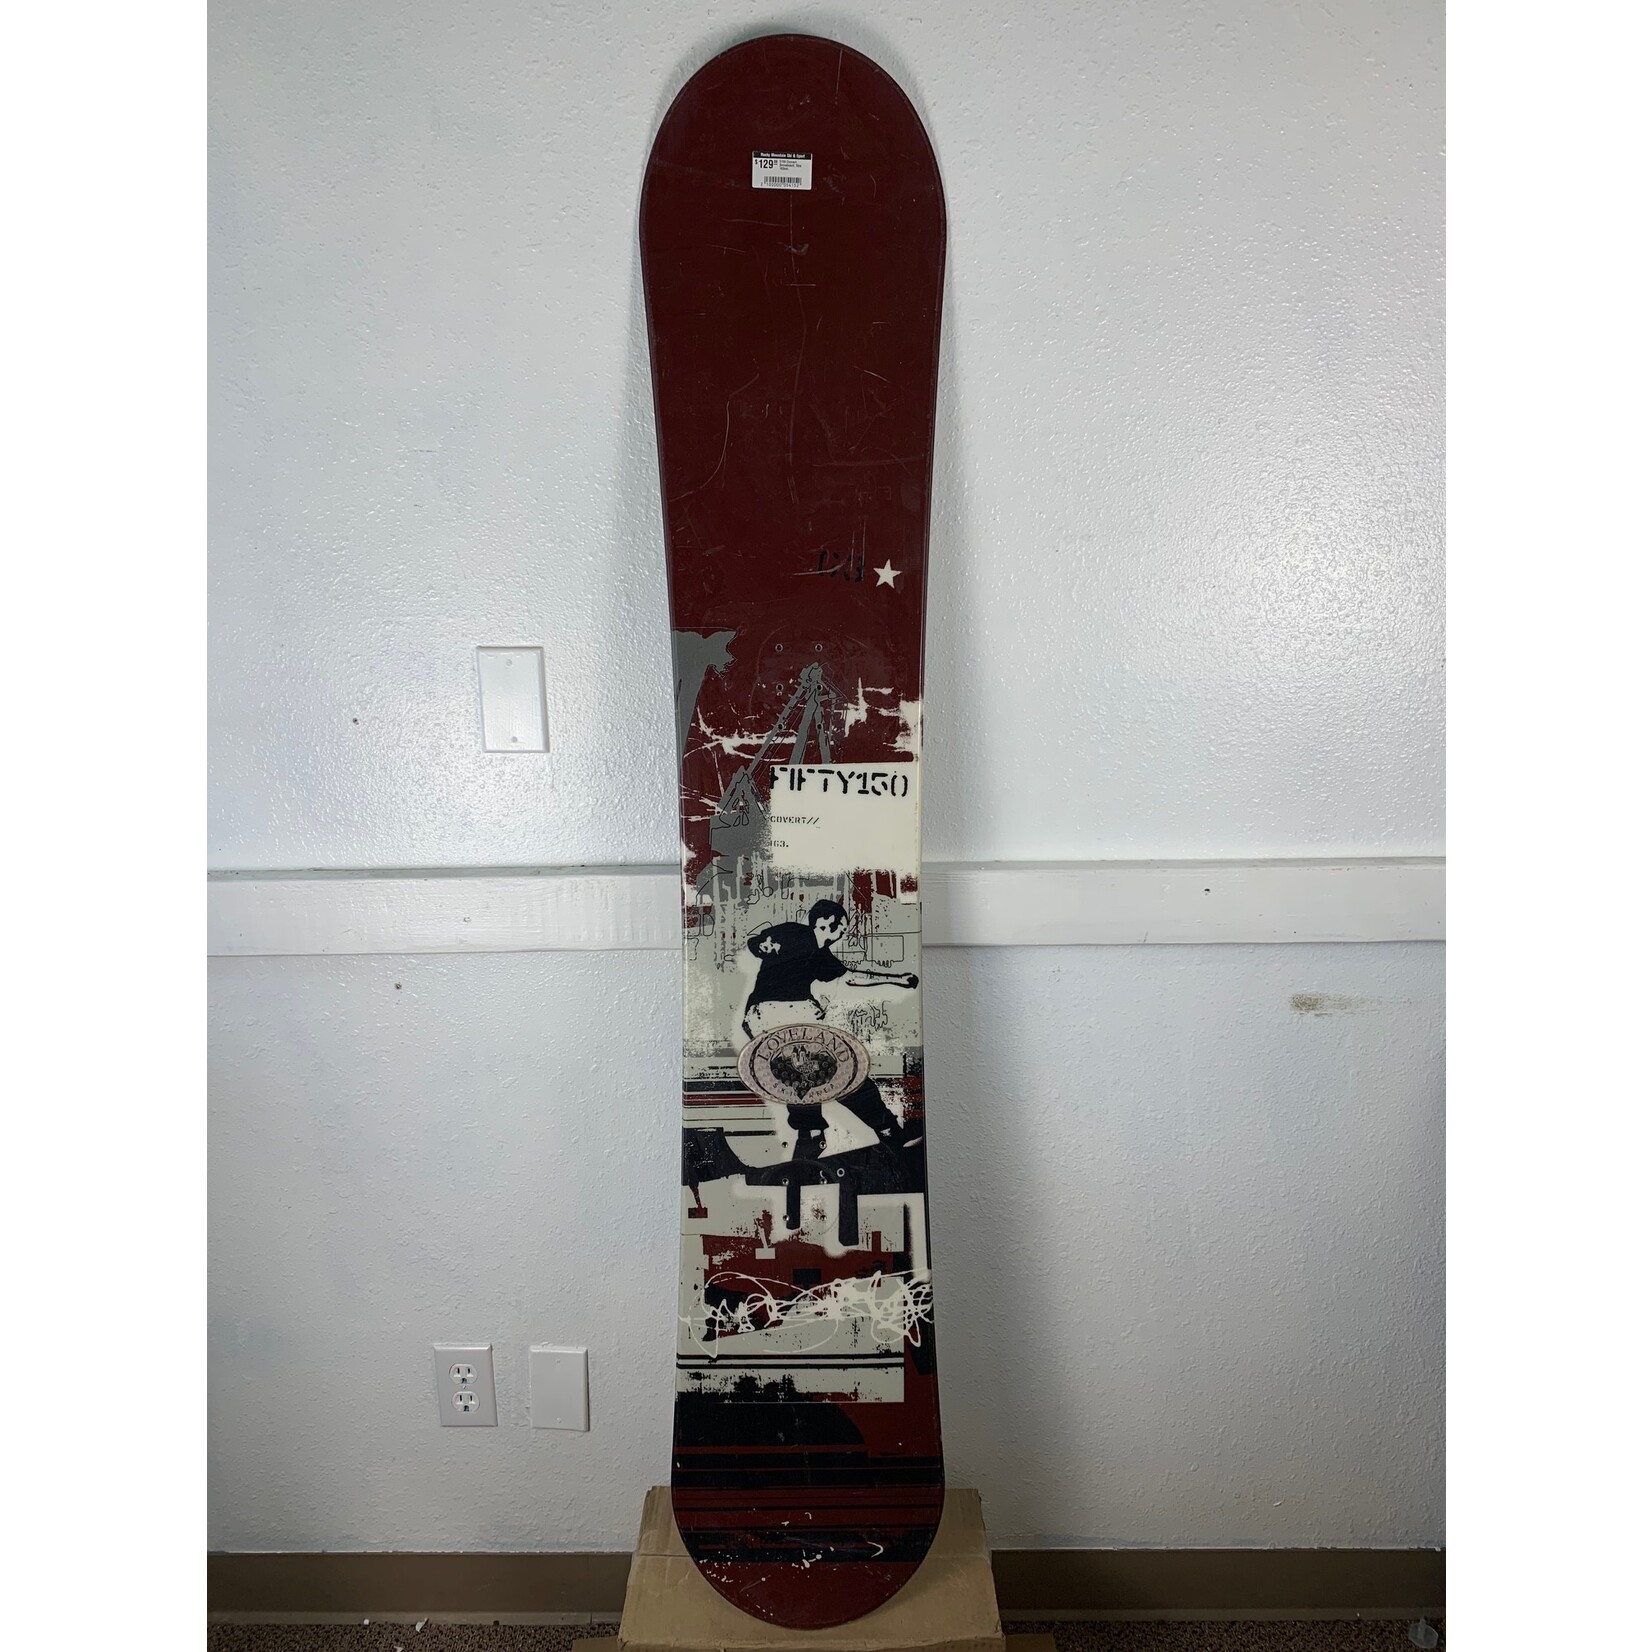 5150 5150 Convert Snowboard, Size 163cm.